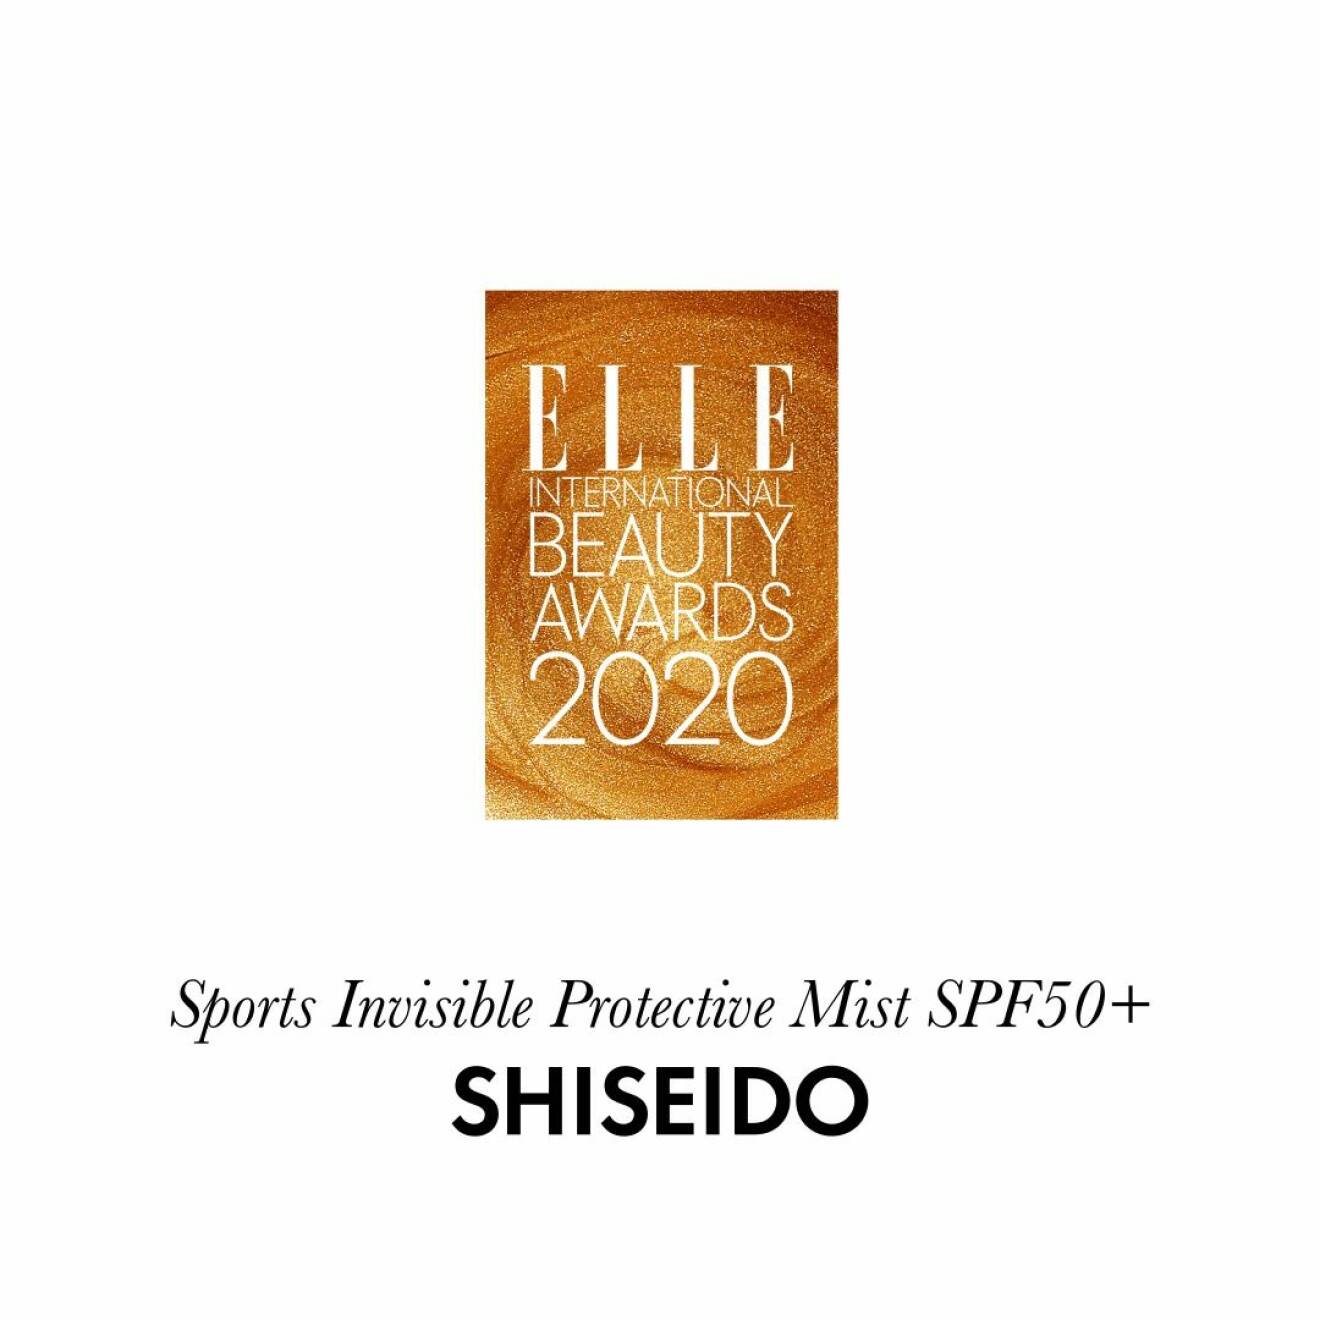 Årets solskydd Sports invisible protective mist spf 50+ från Shiseido.